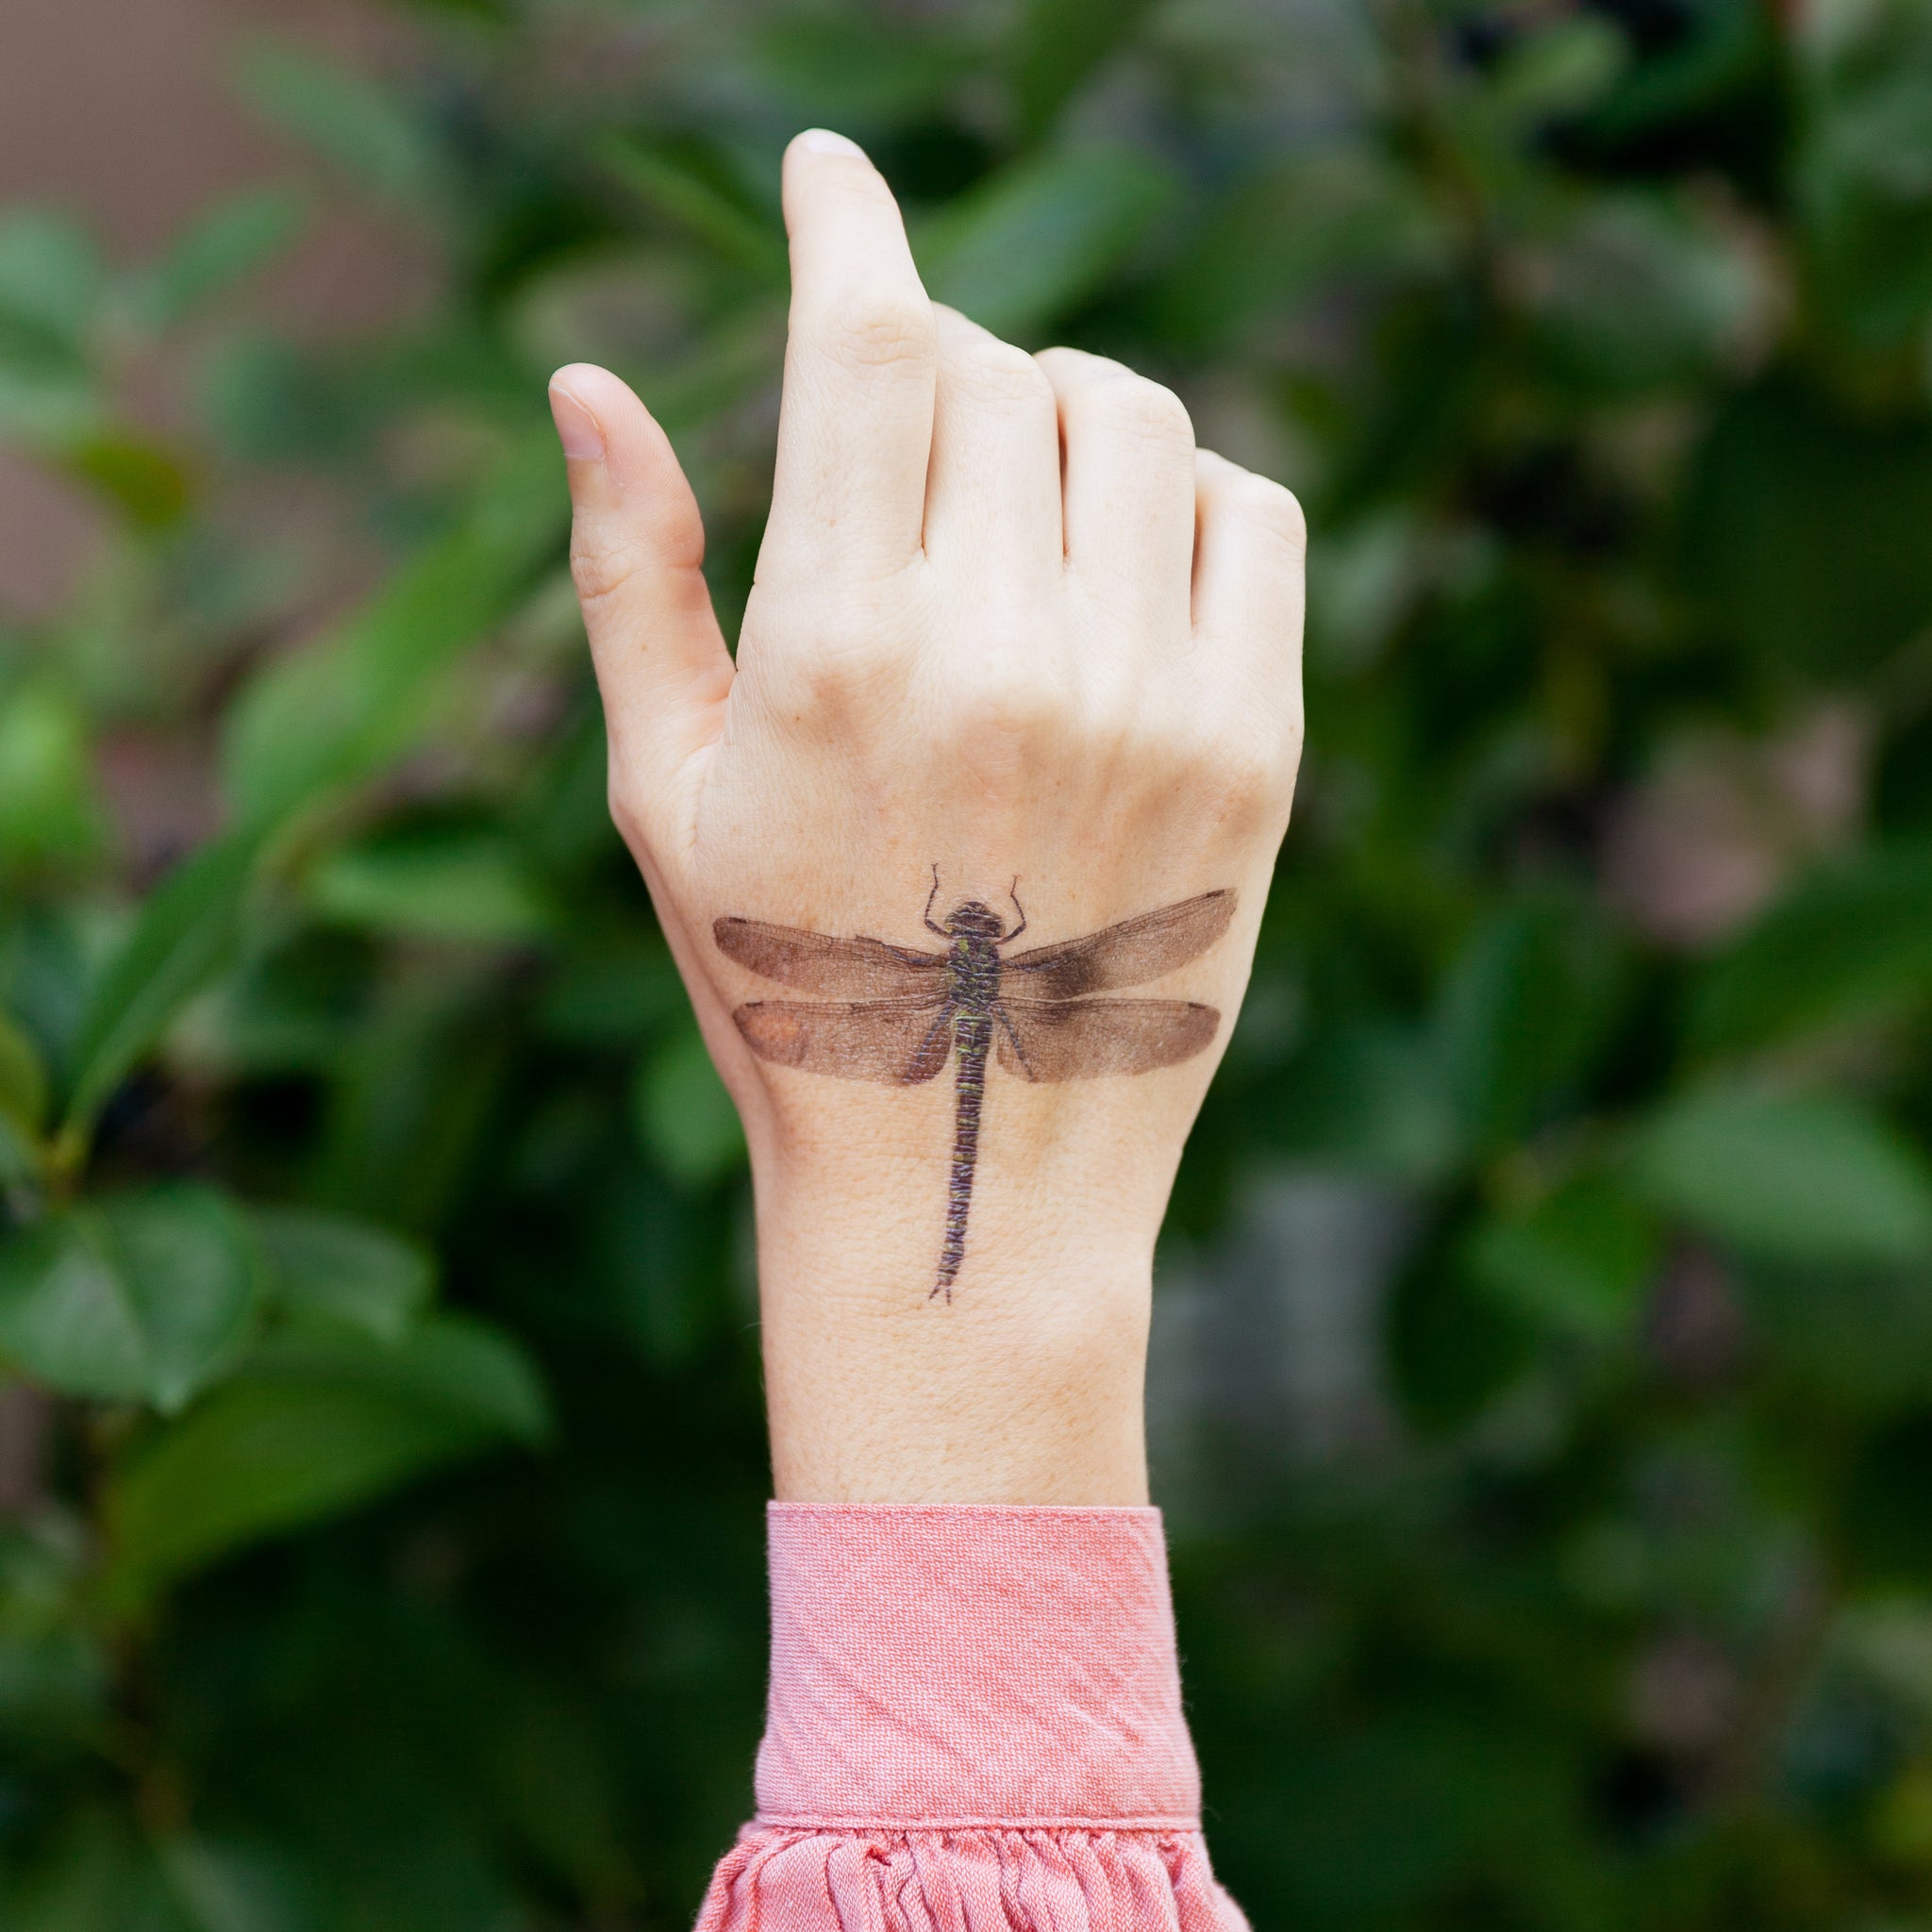 Tattoo tagged with: insect, small, dragonfly, animal, tiny, hand poked,  little, laramaju, inner forearm, medium size, nano | inked-app.com